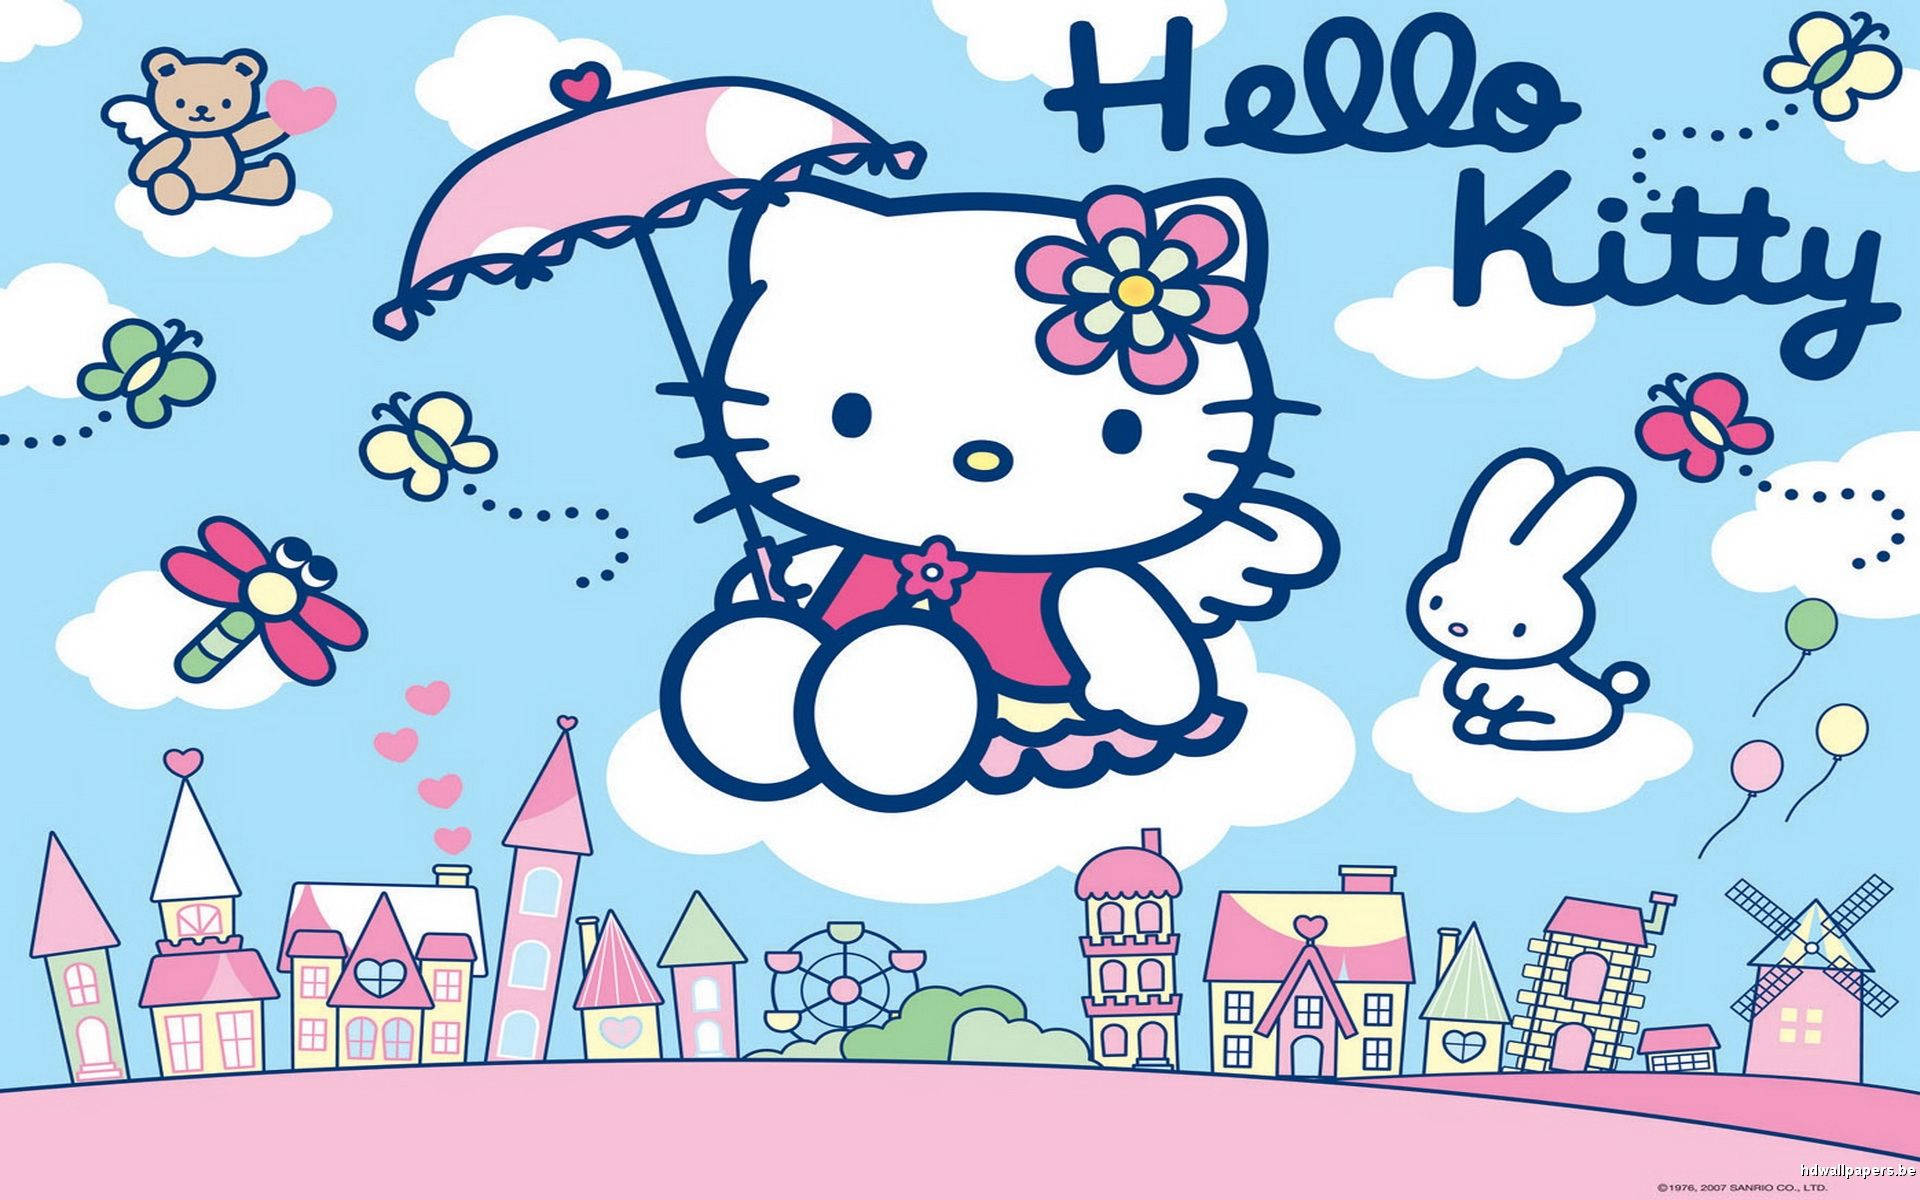 Free Hello Kitty Wallpaper Downloads 200 Hello Kitty Wallpapers for  FREE  Wallpaperscom